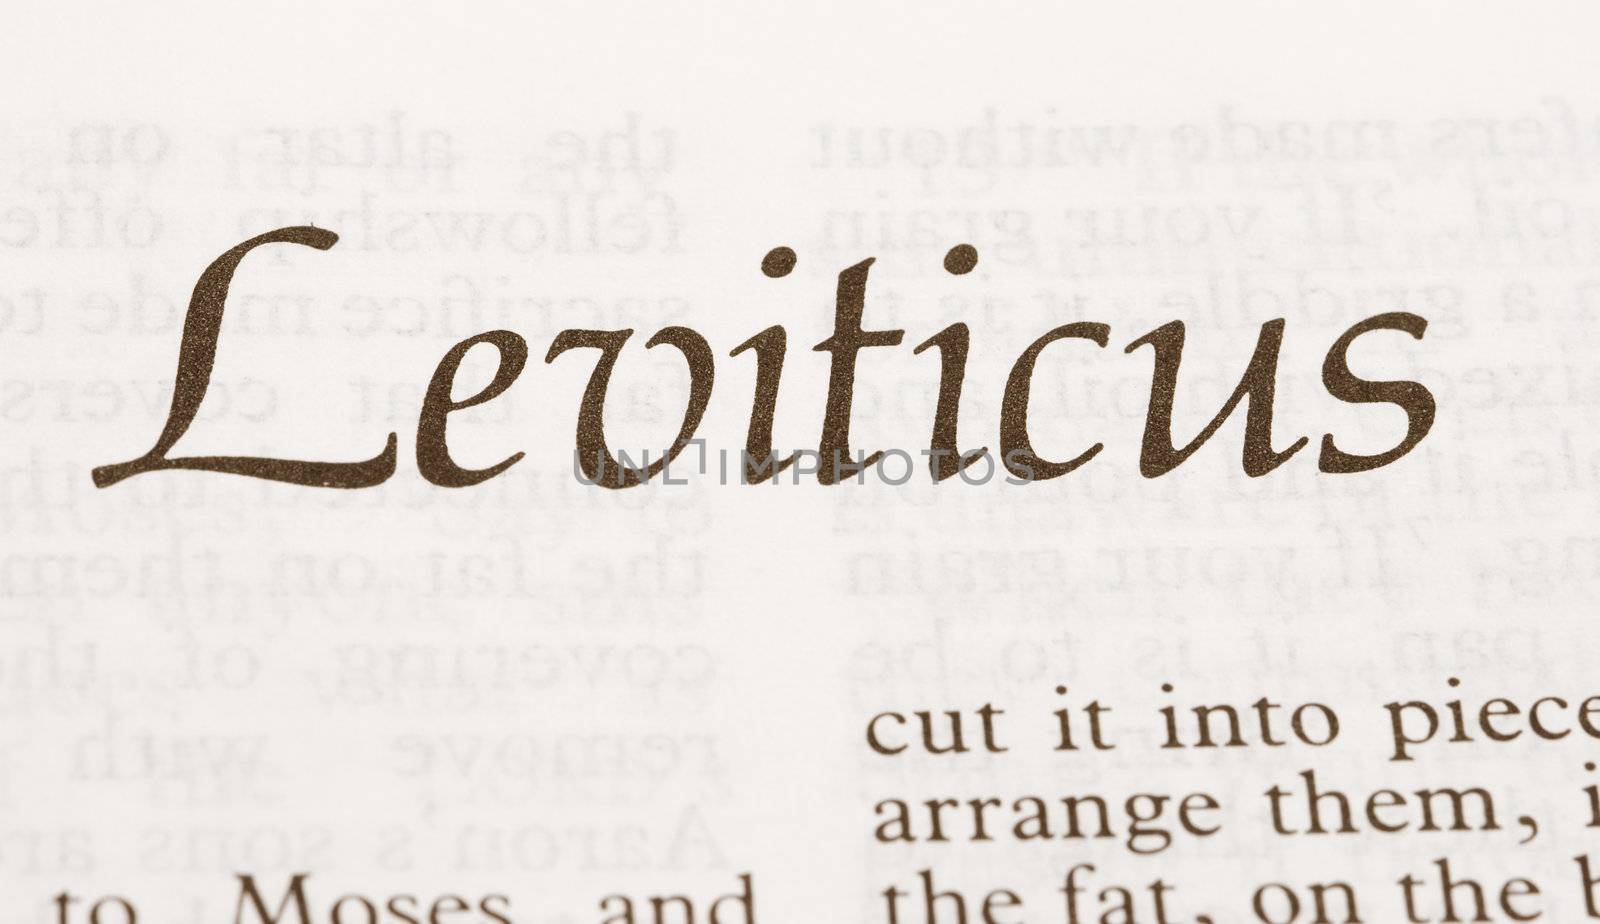 Leviticus by Kuzma